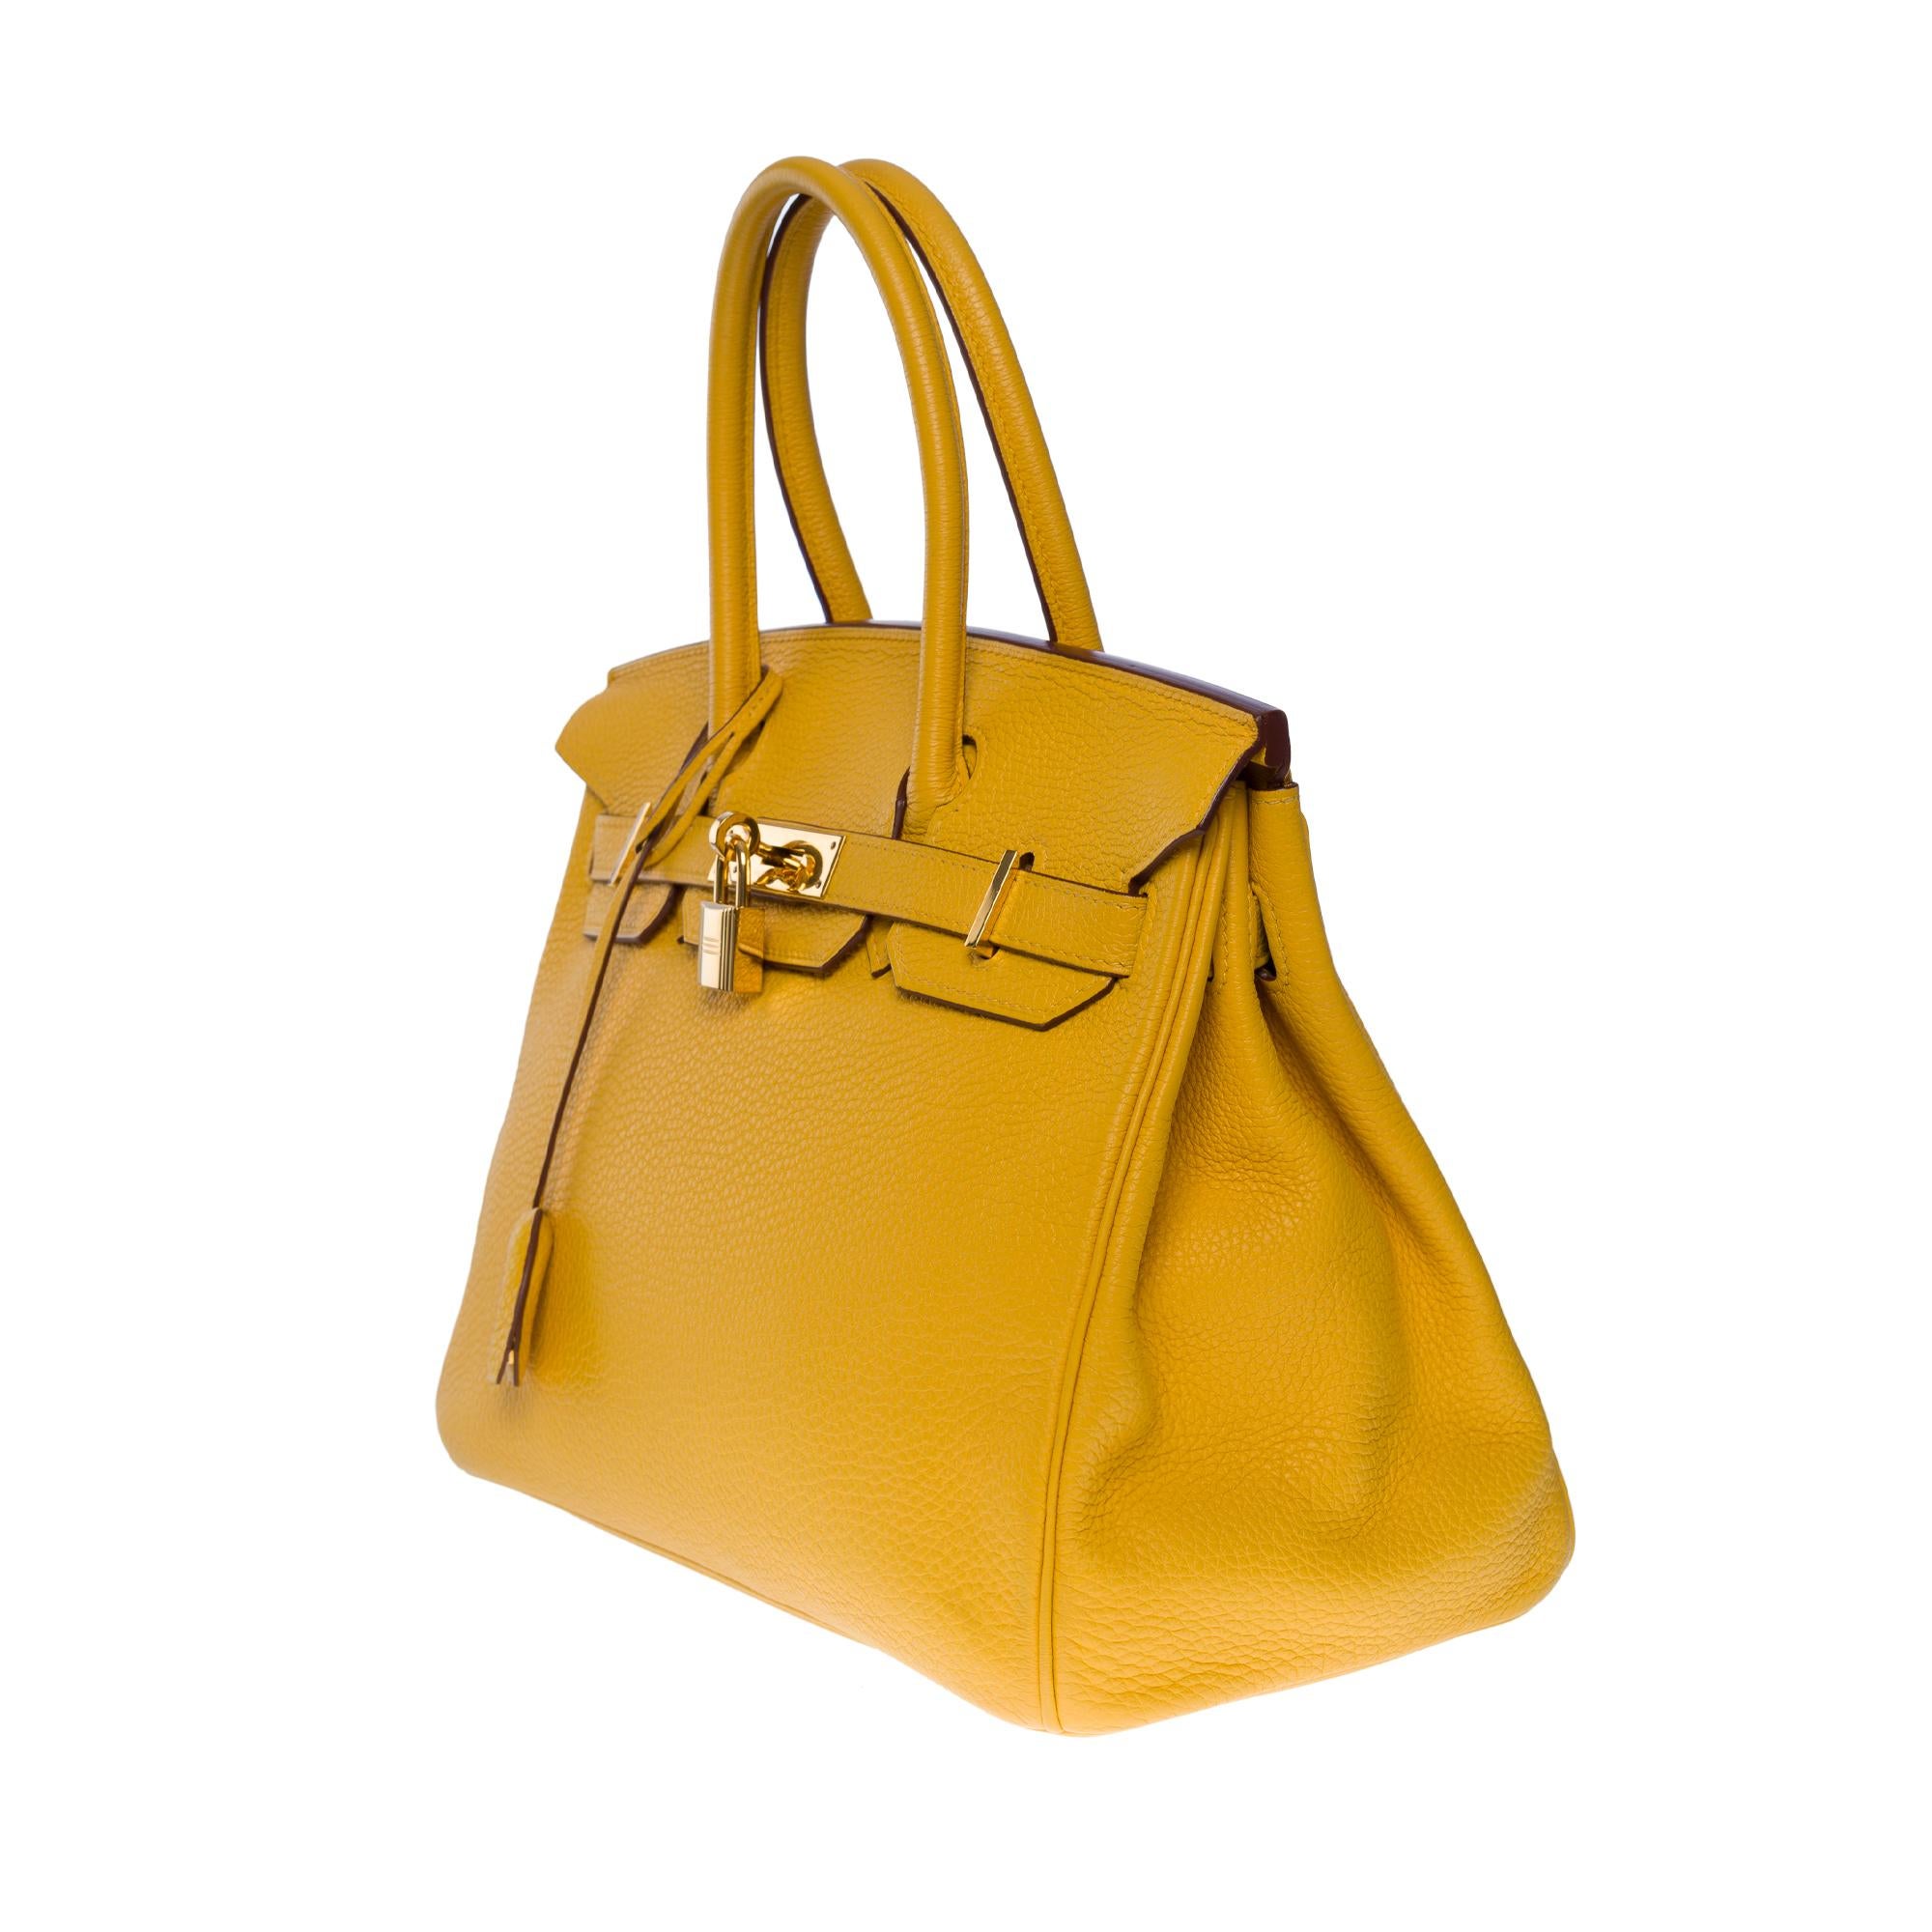 Women's Amazing & Bright Hermès Birkin 30 handbag in Yellow Togo leather, GHW